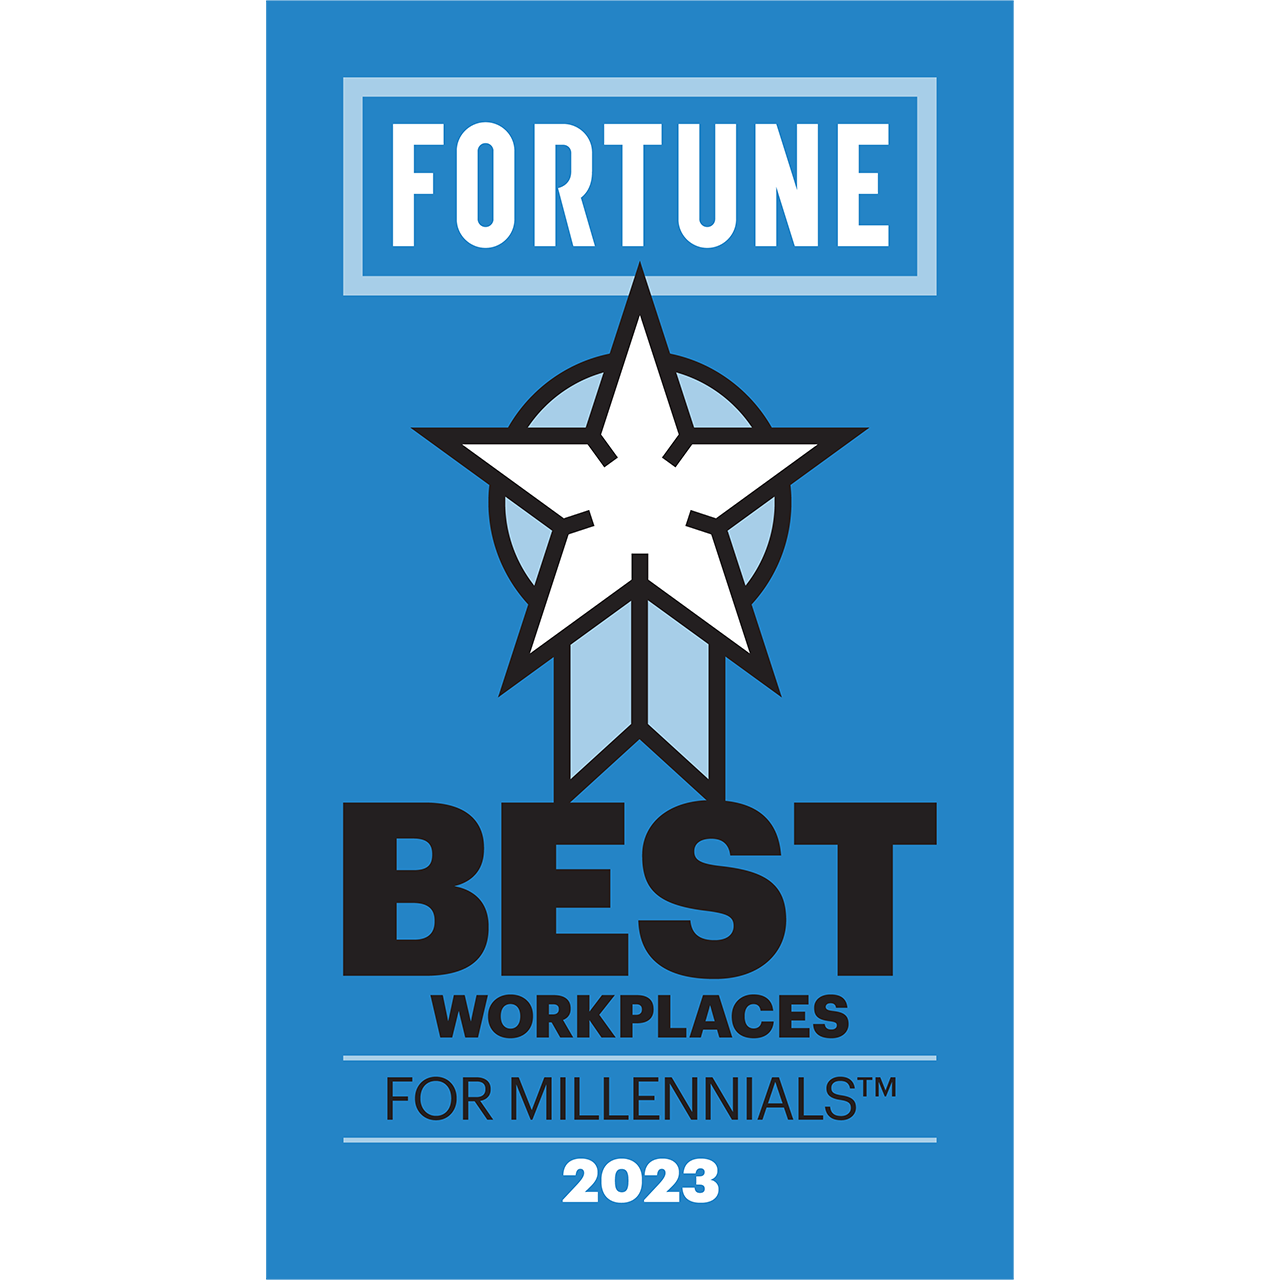 Fortune Best Workplaces For Millennials 2023